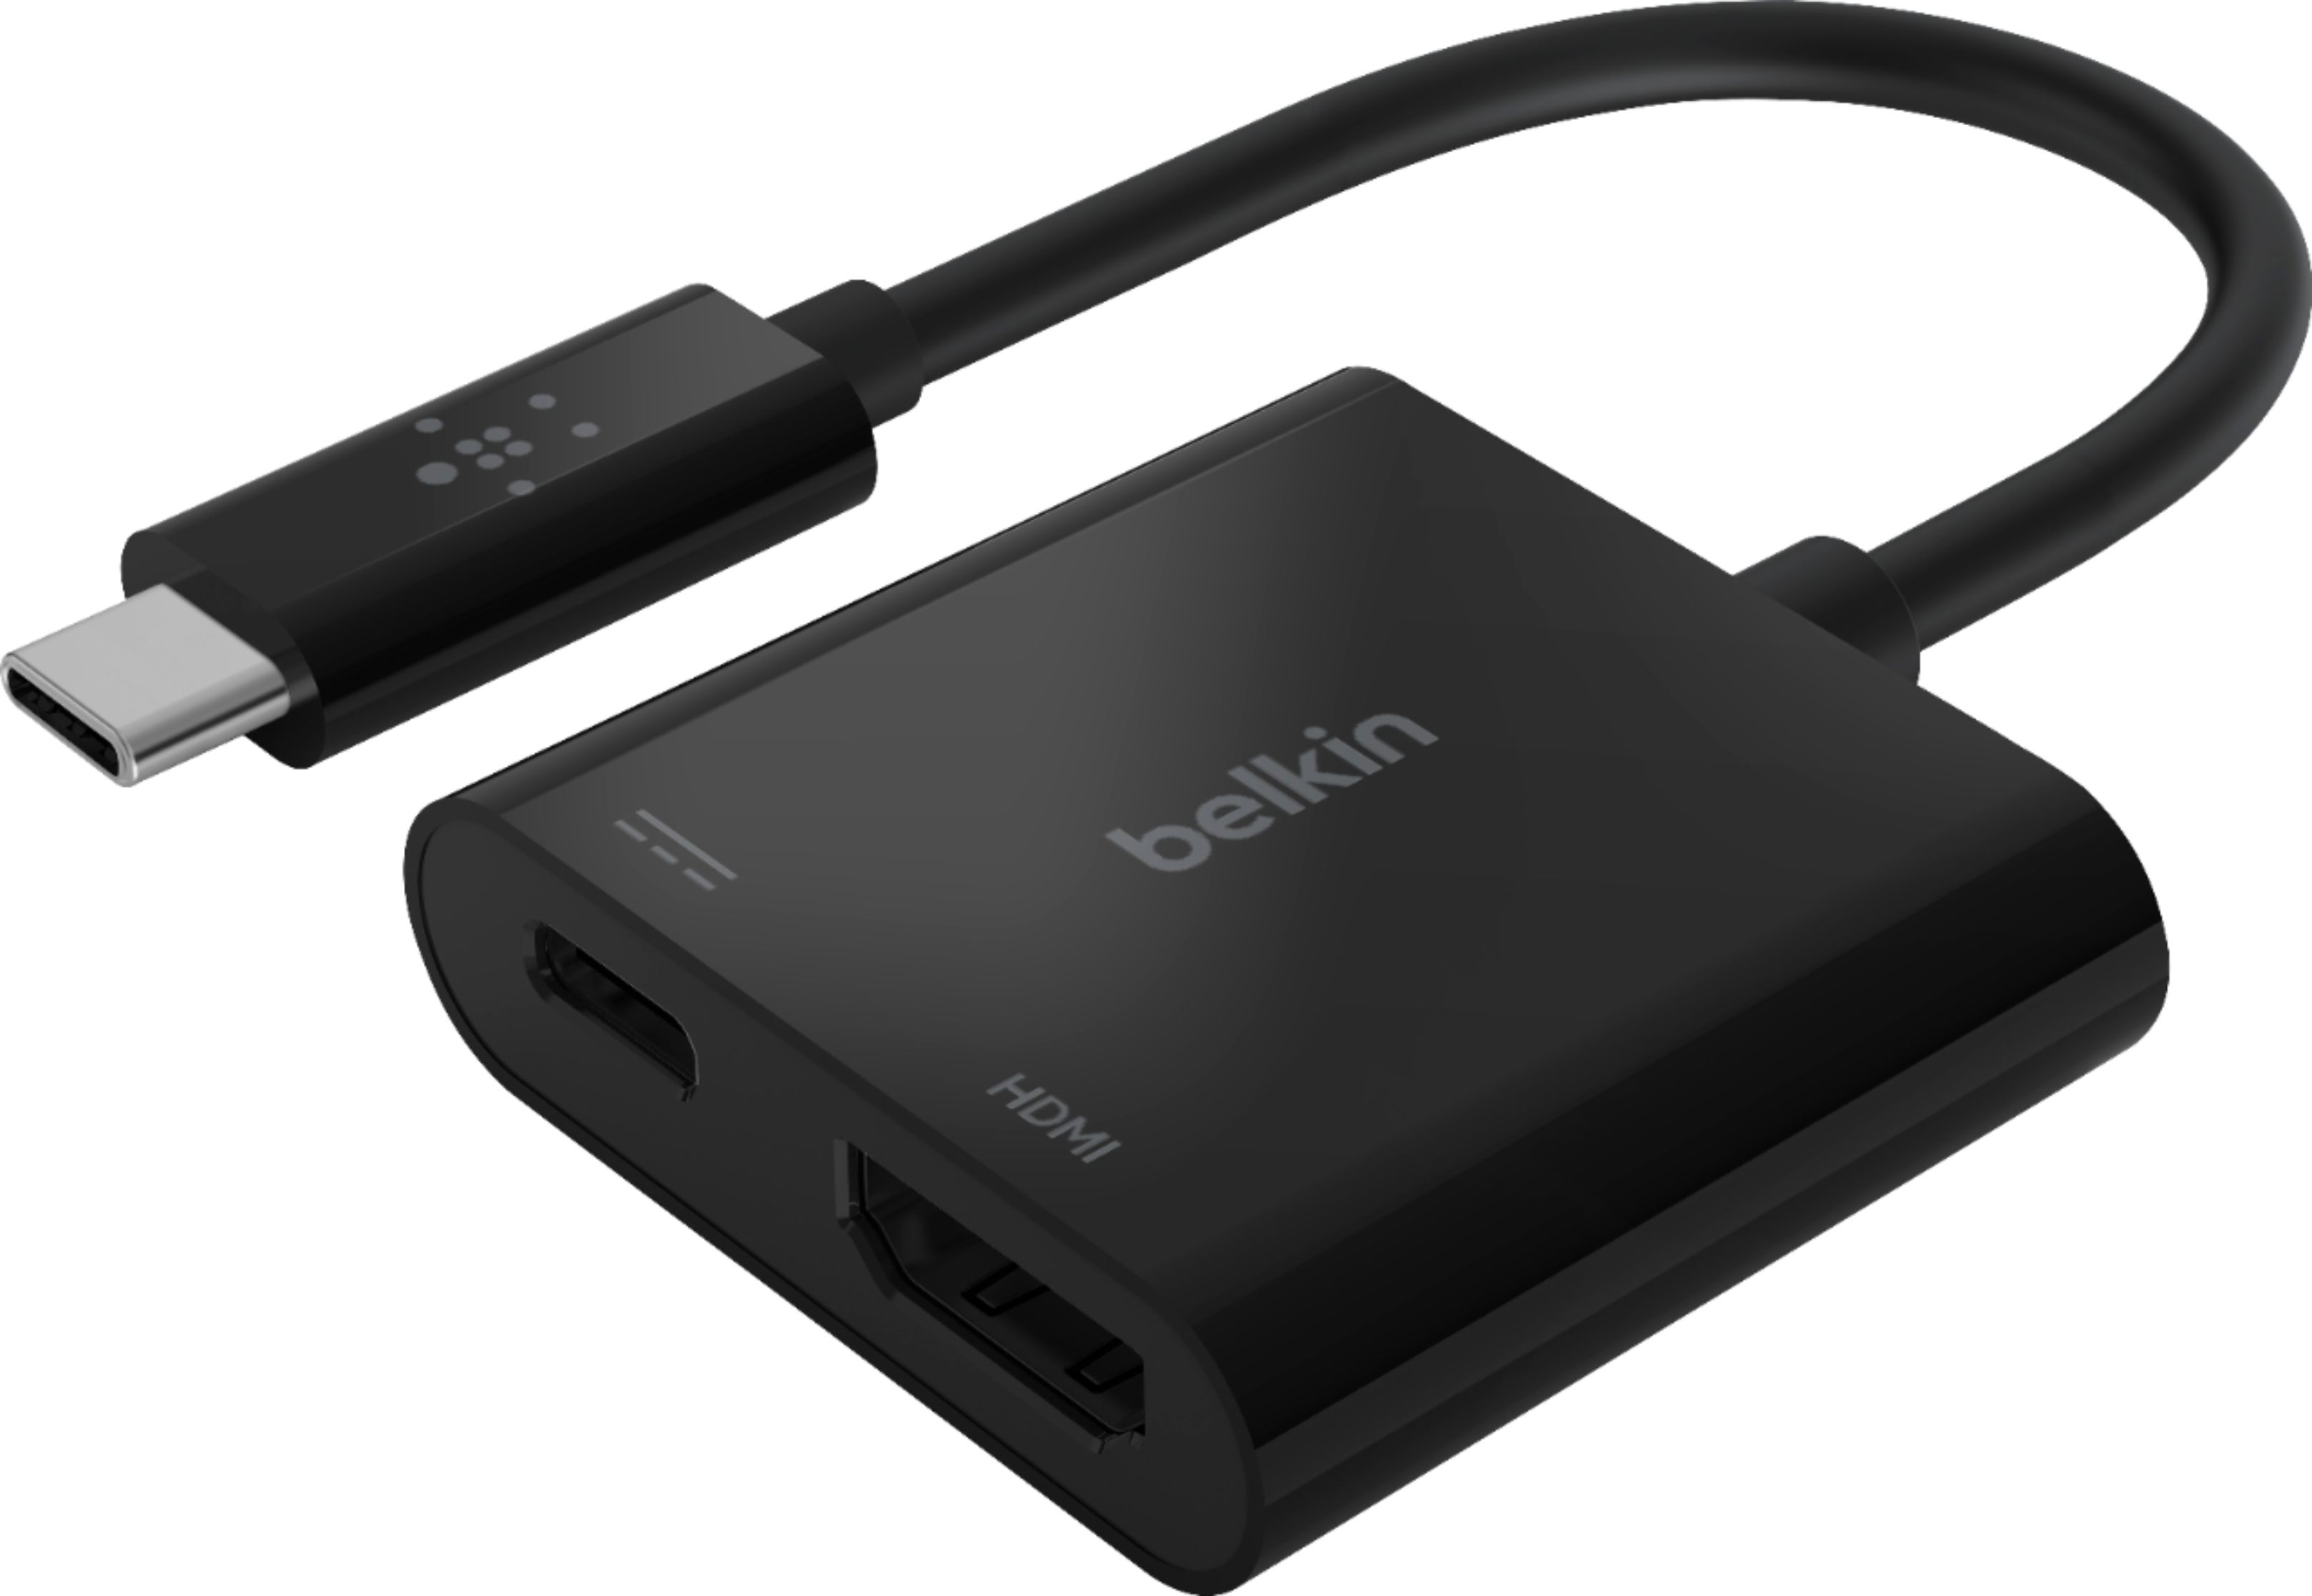 Belkin USB C to HDMI Adapter + USBC Charging Port, 4K UHD Video